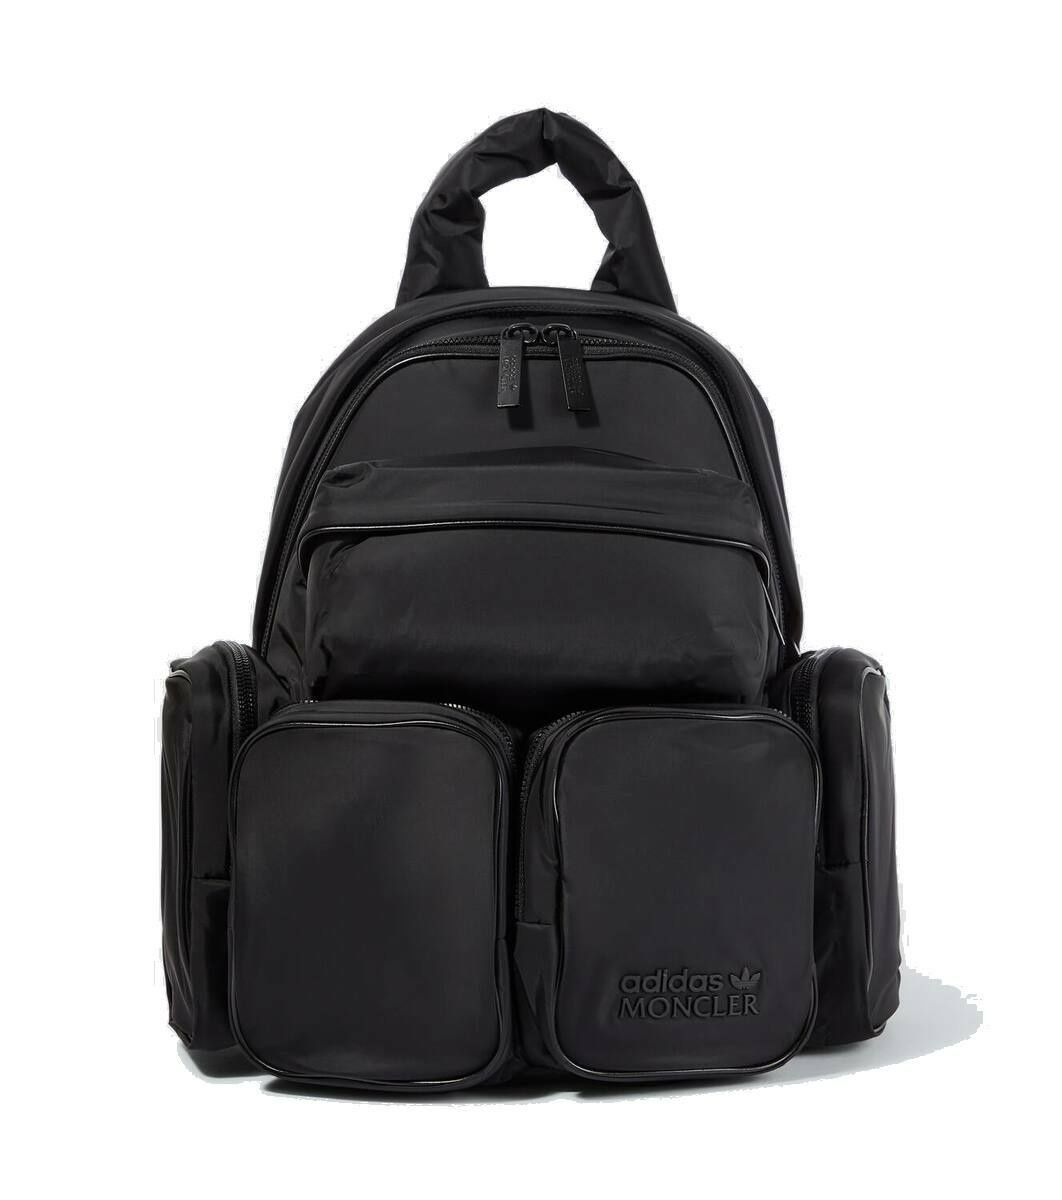 Photo: Moncler Genius x Adidas backpack